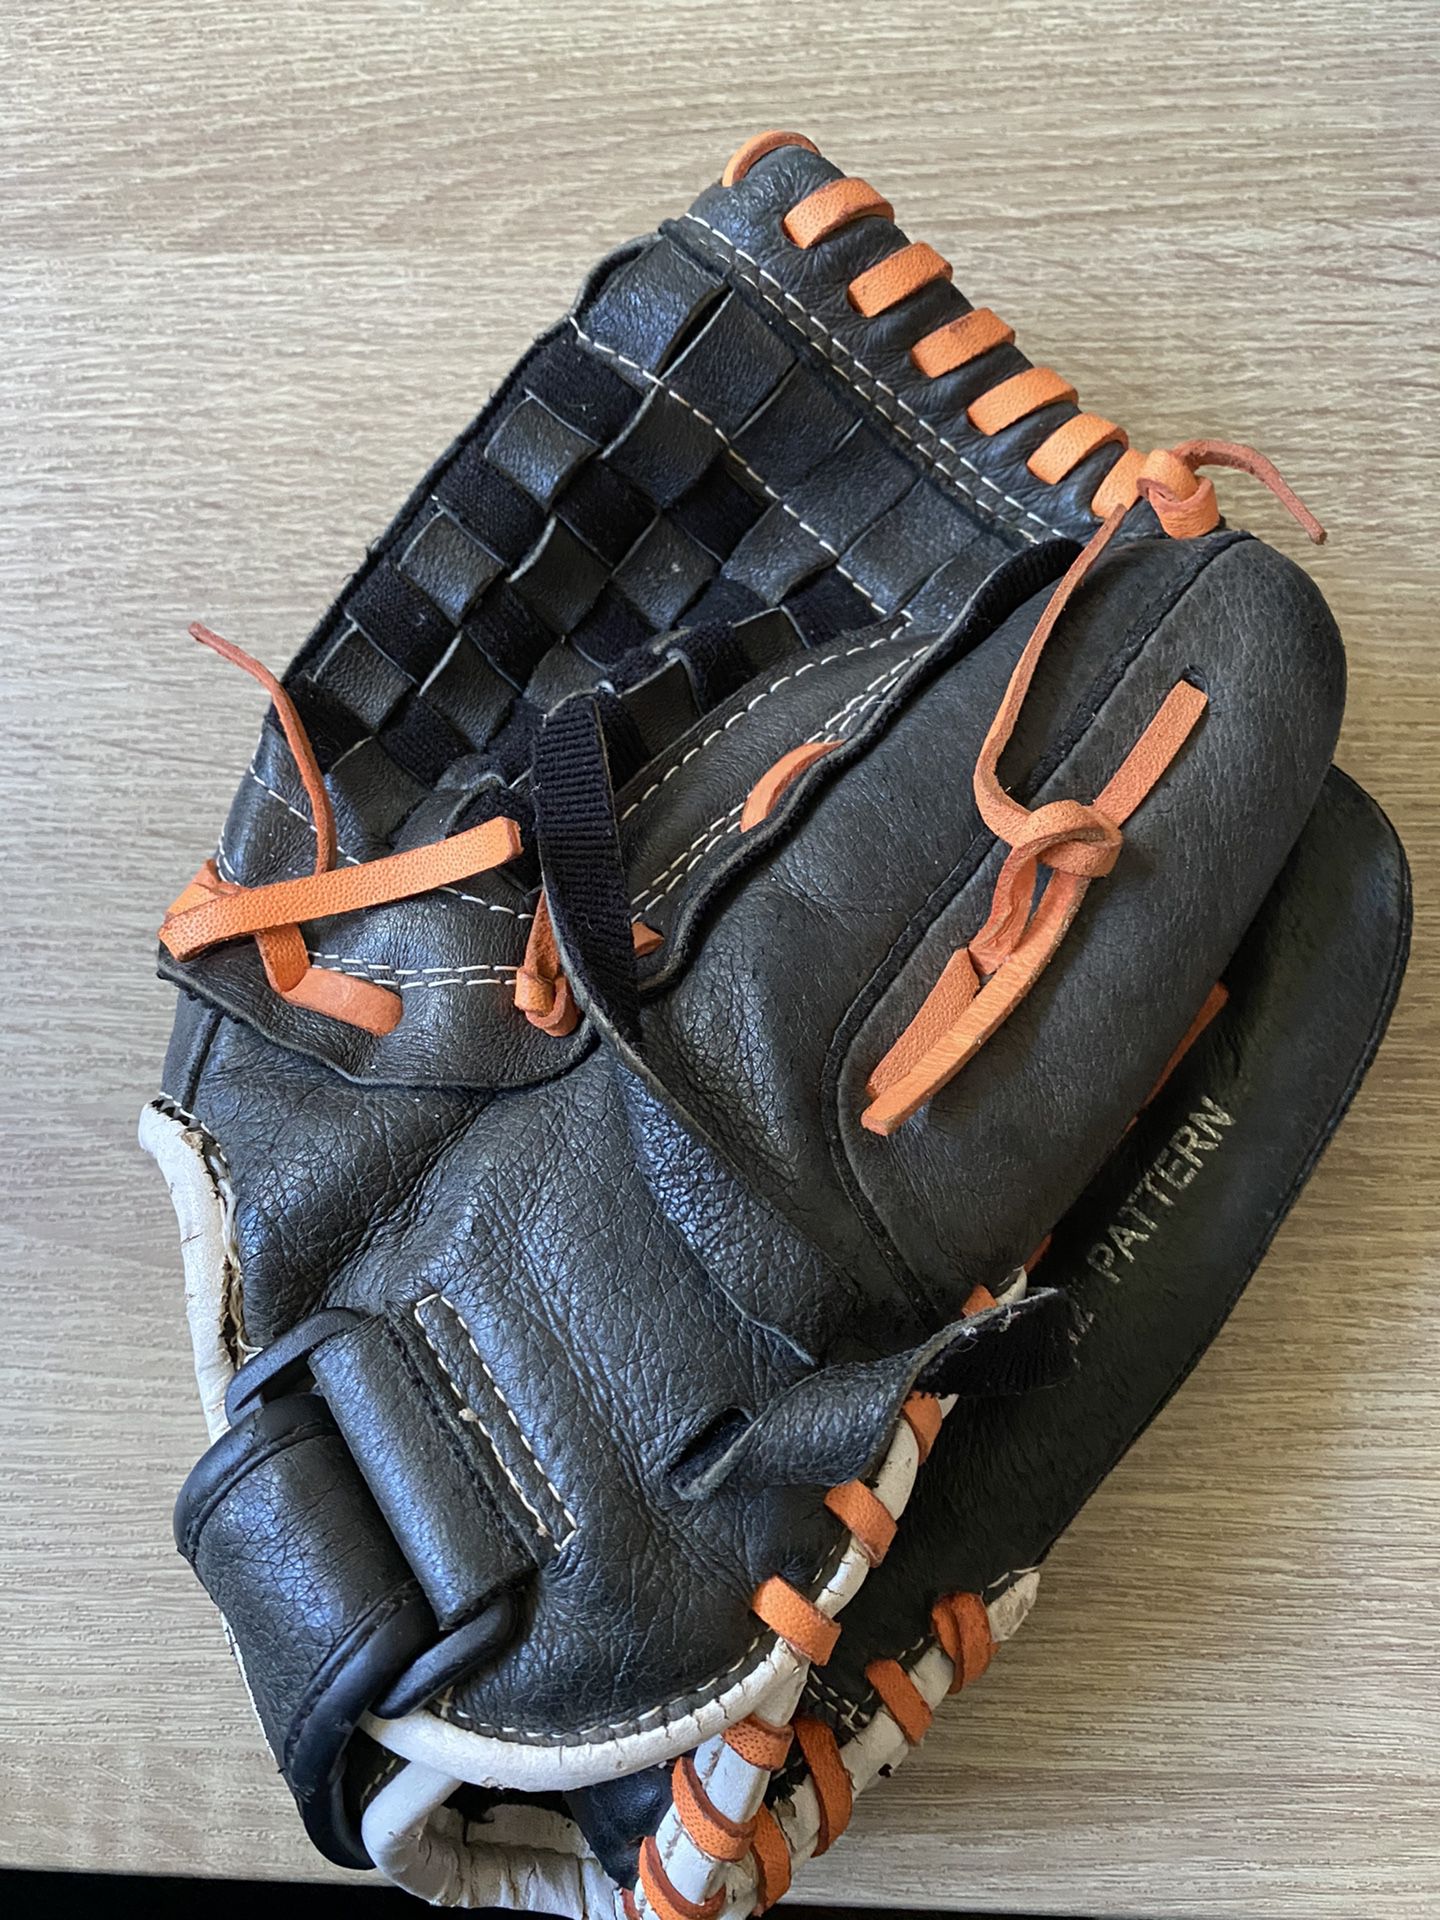 Softball glove